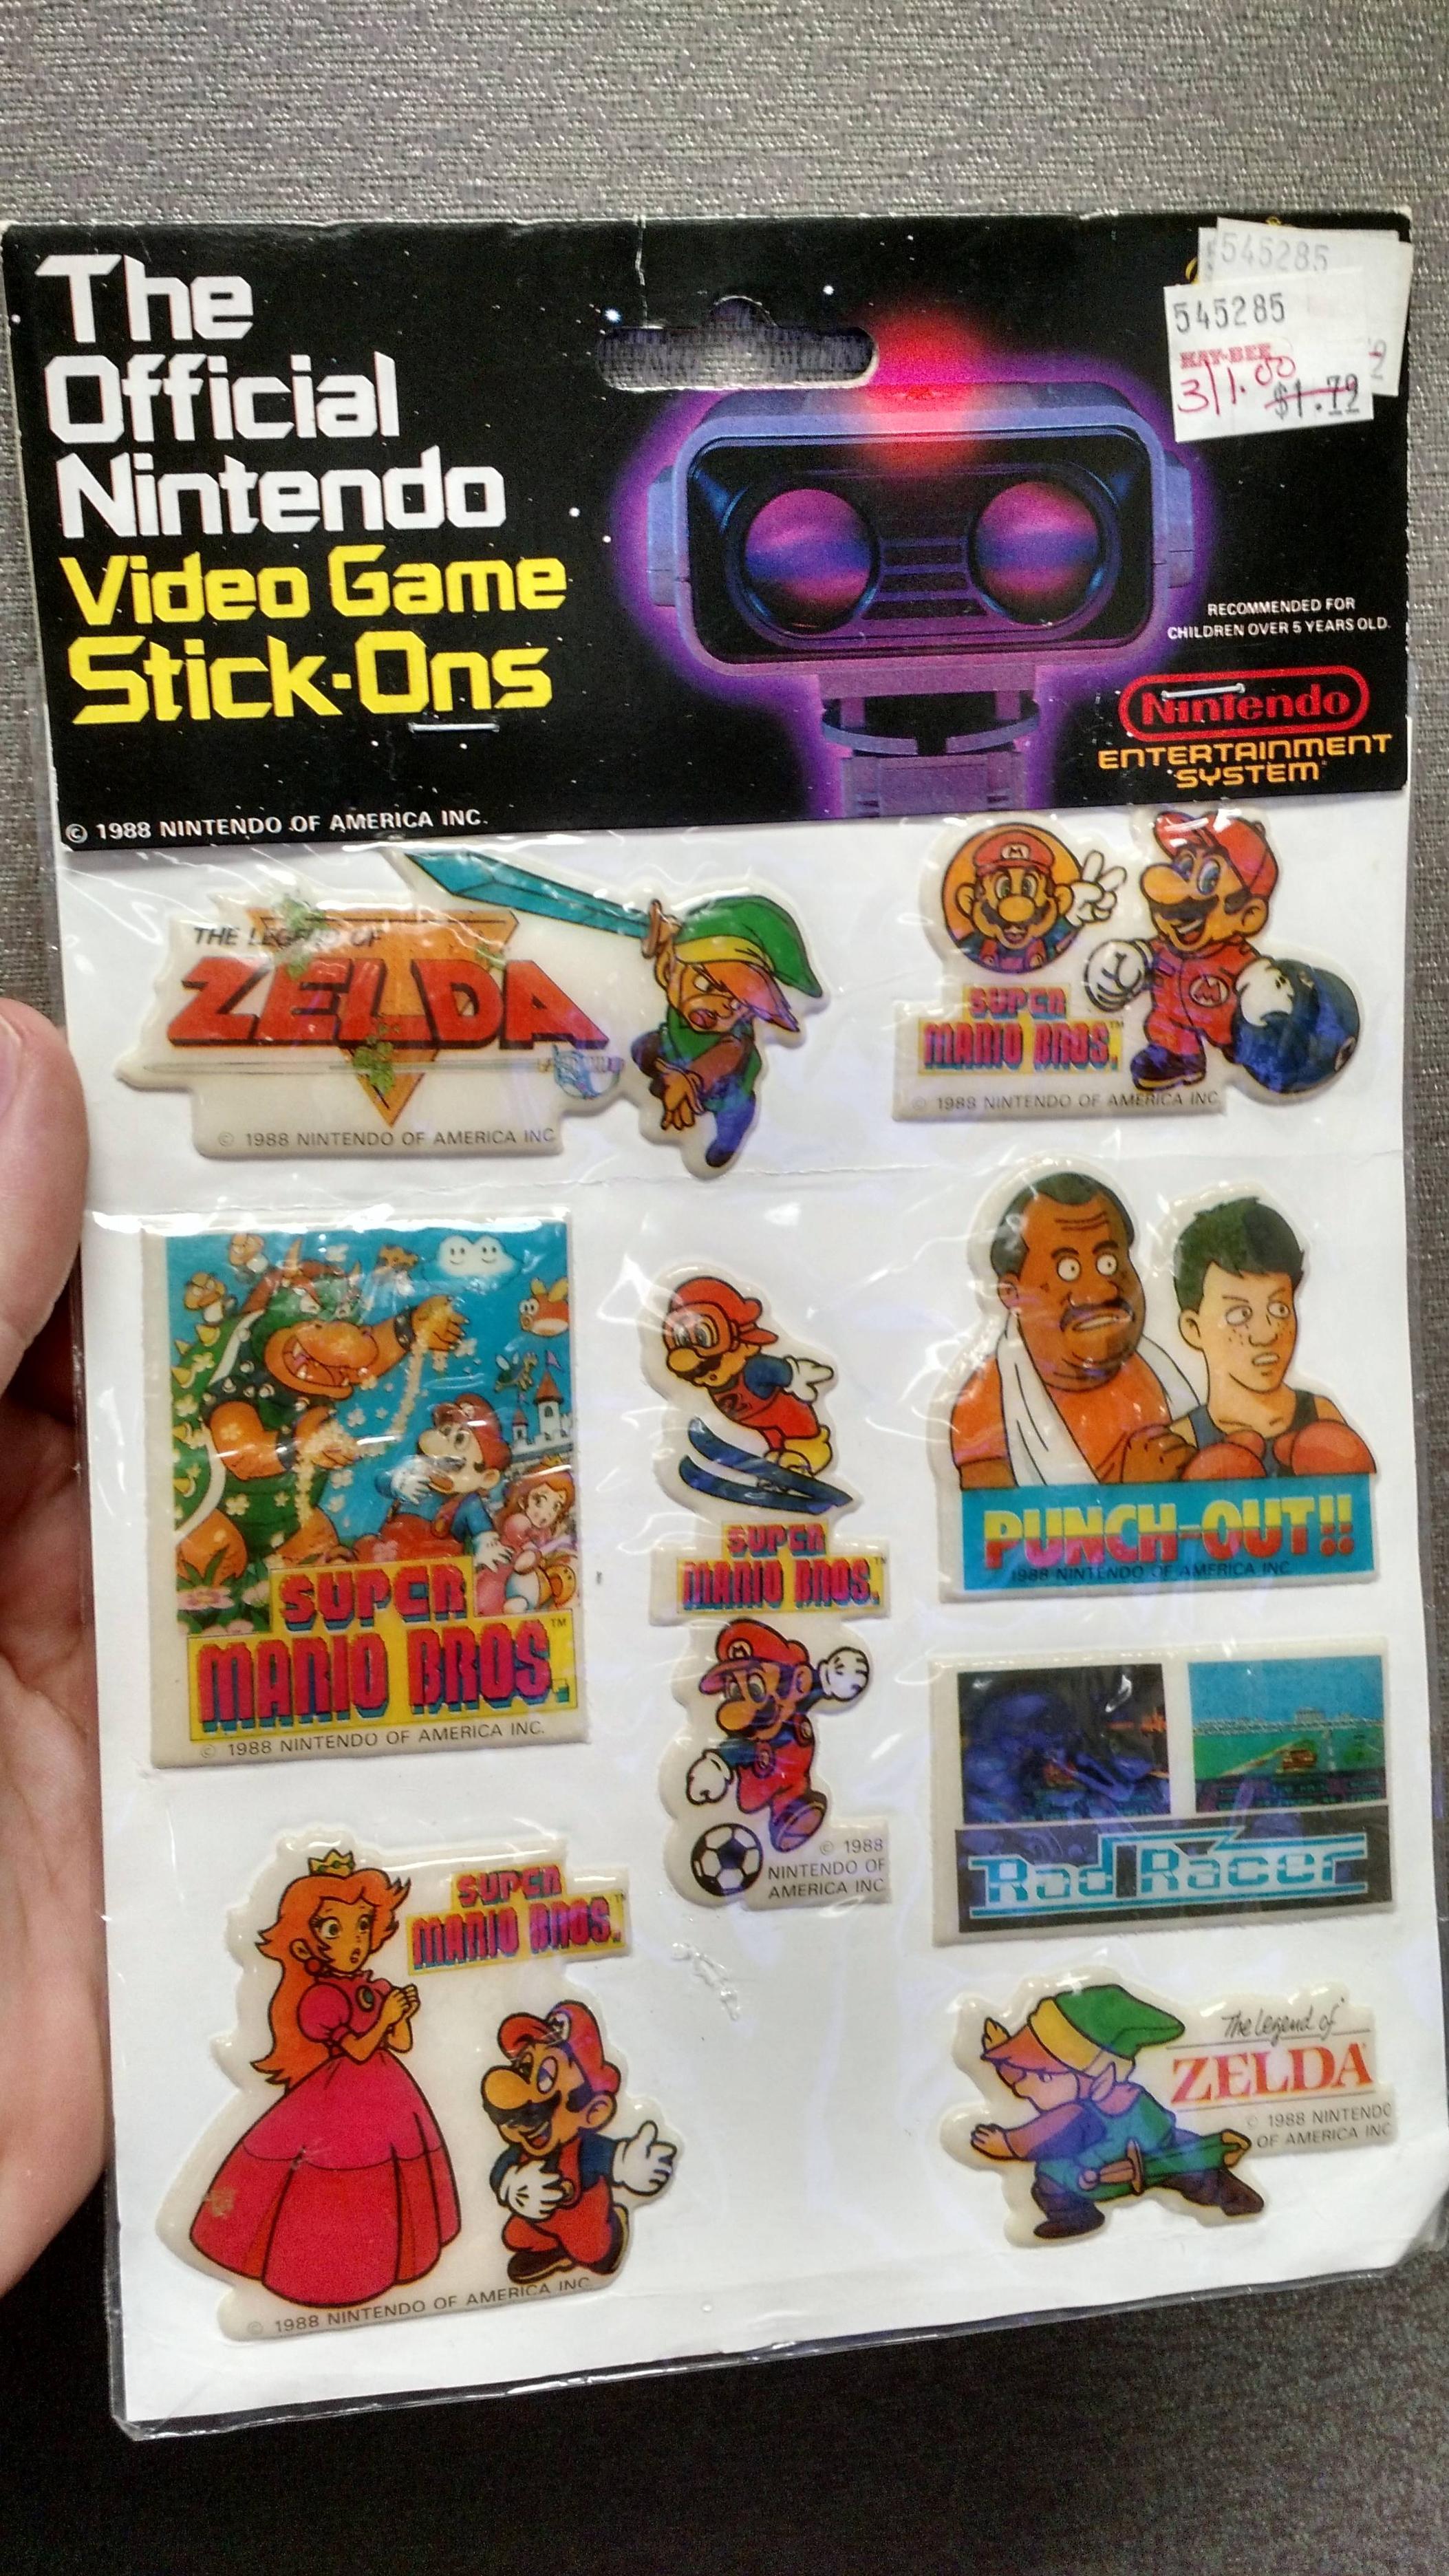 90's memories - S . The Official Nintendo Video Game Stick Ons Pa Lrncele Zelda